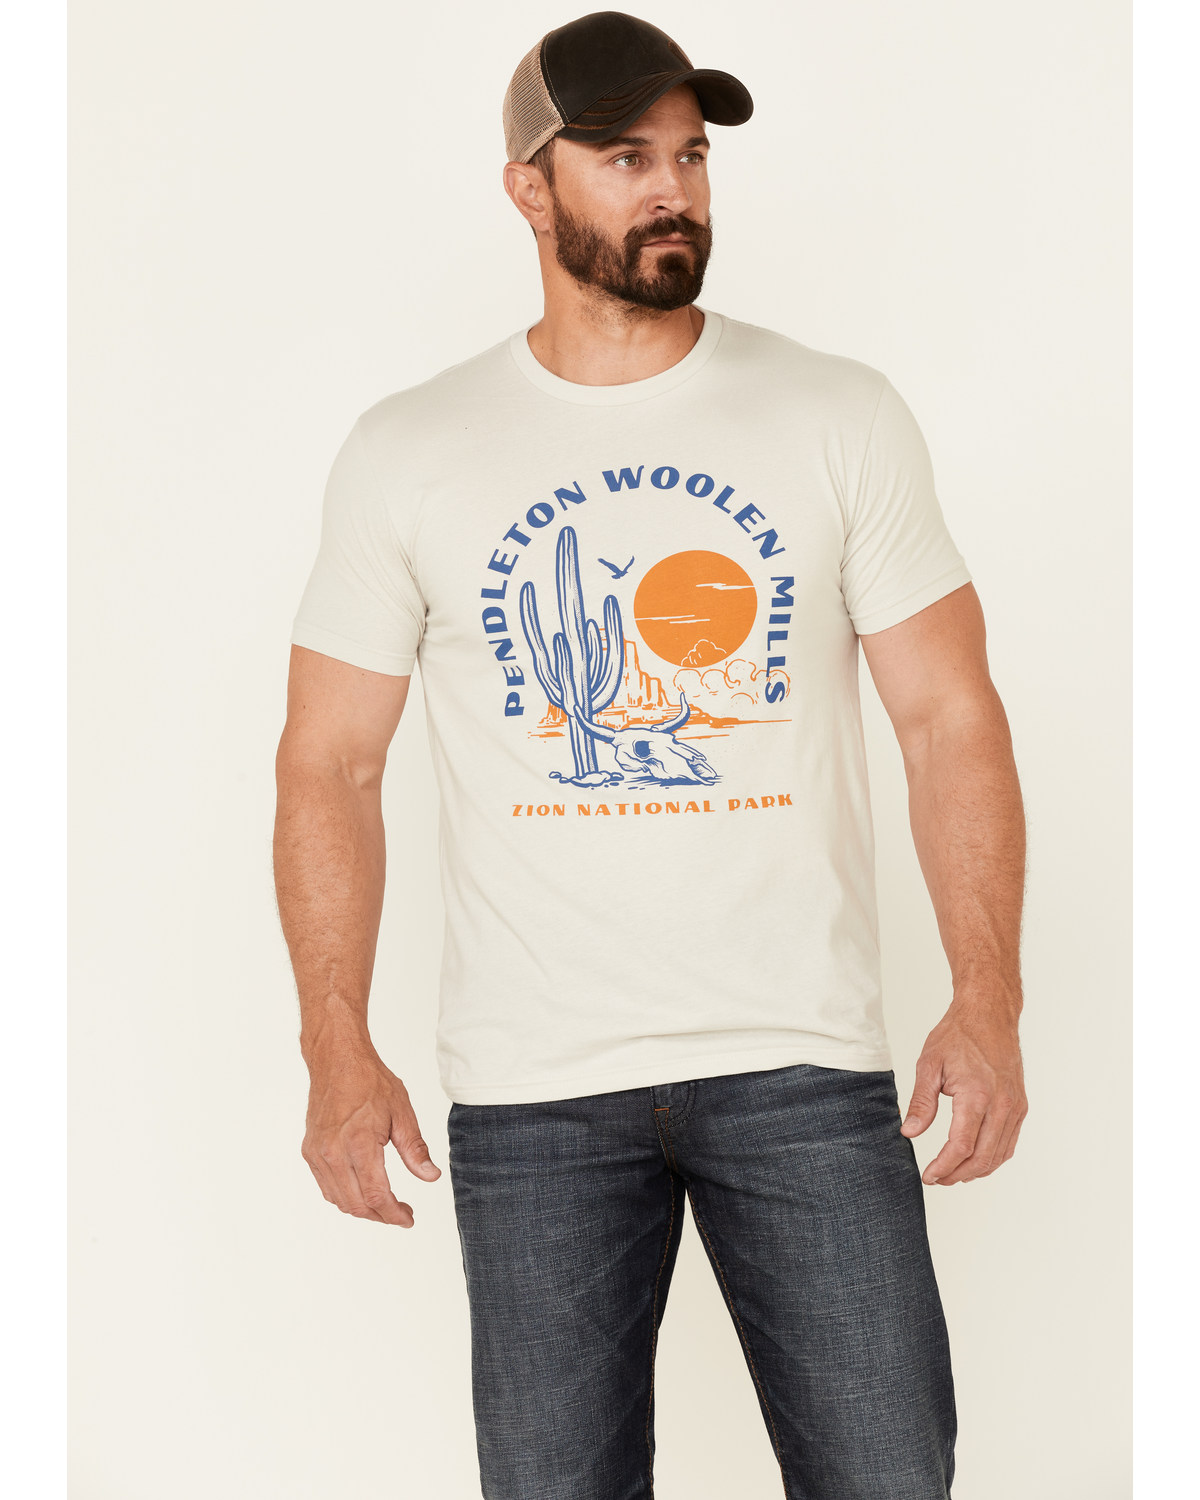 Pendleton Men's Heritage Zion National Park Graphic Short Sleeve T-Shirt